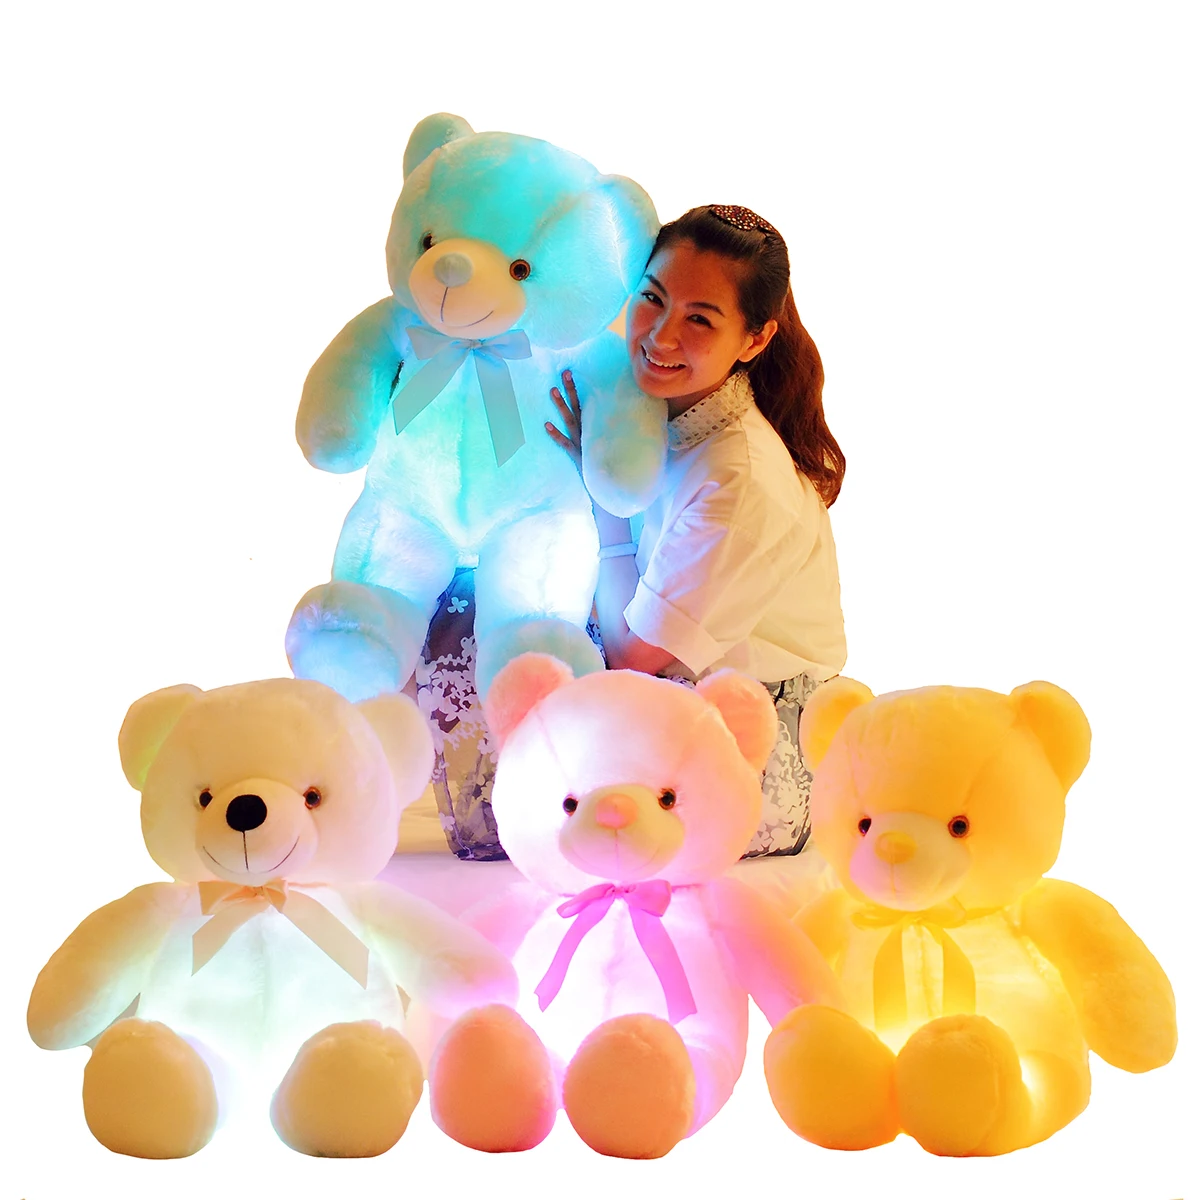 

30/50cm Luminous Creative Light Up LED Colorful Glowing Teddy Bear Stuffed Animal Plush Toy Christmas Gift for Kid